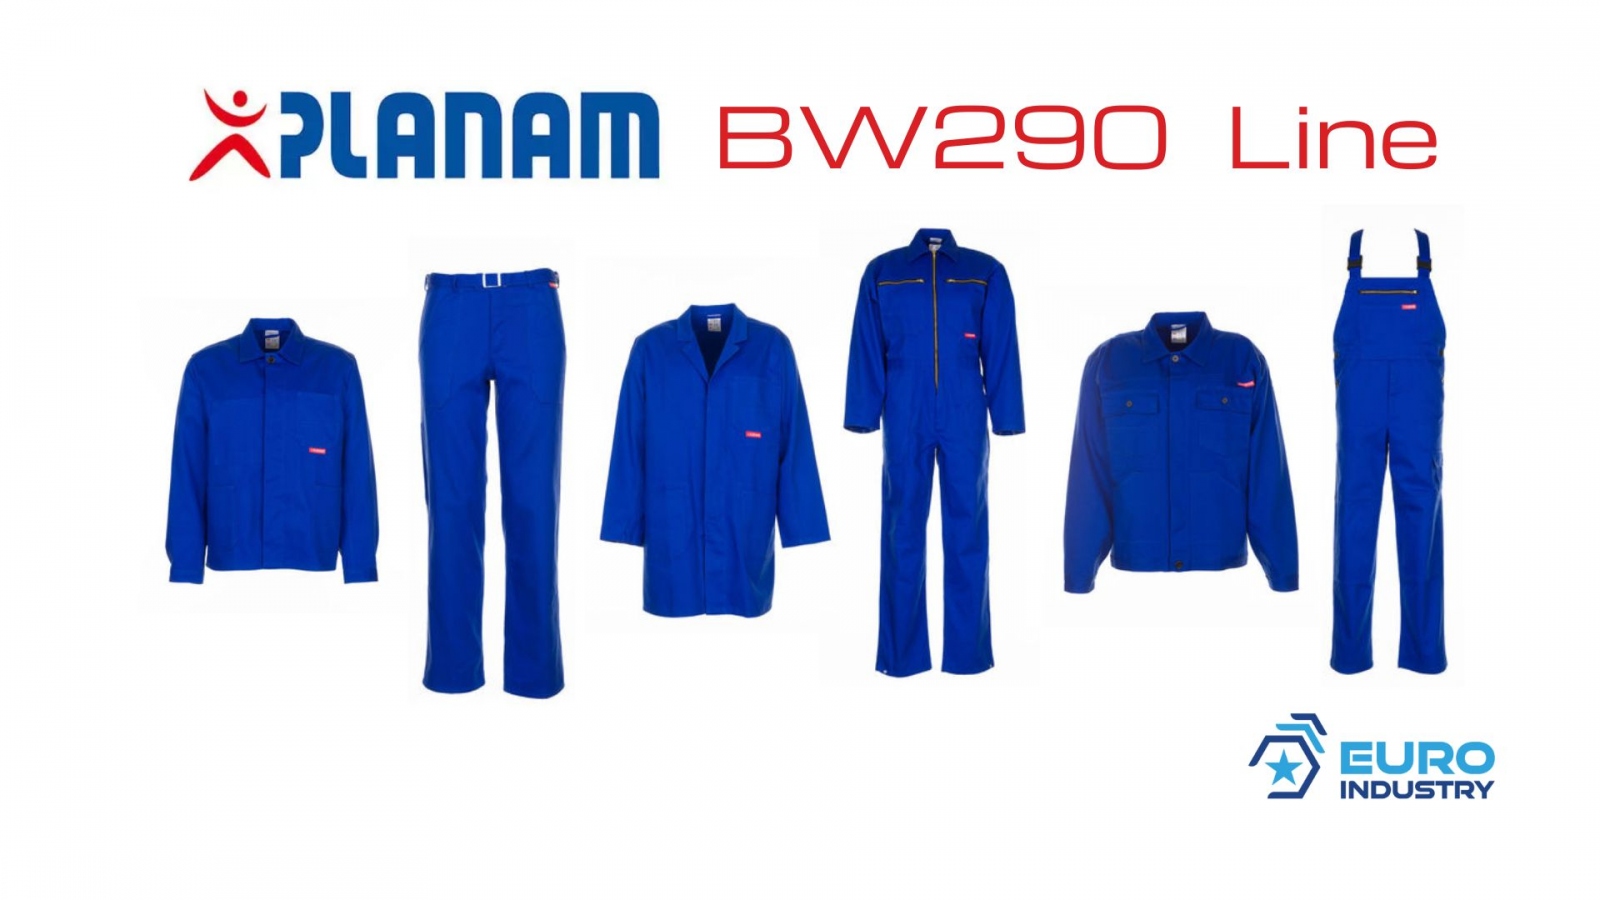 pics/Planam/0131/planam-bw-290-linie-kornblau-baumwolle-details.jpg